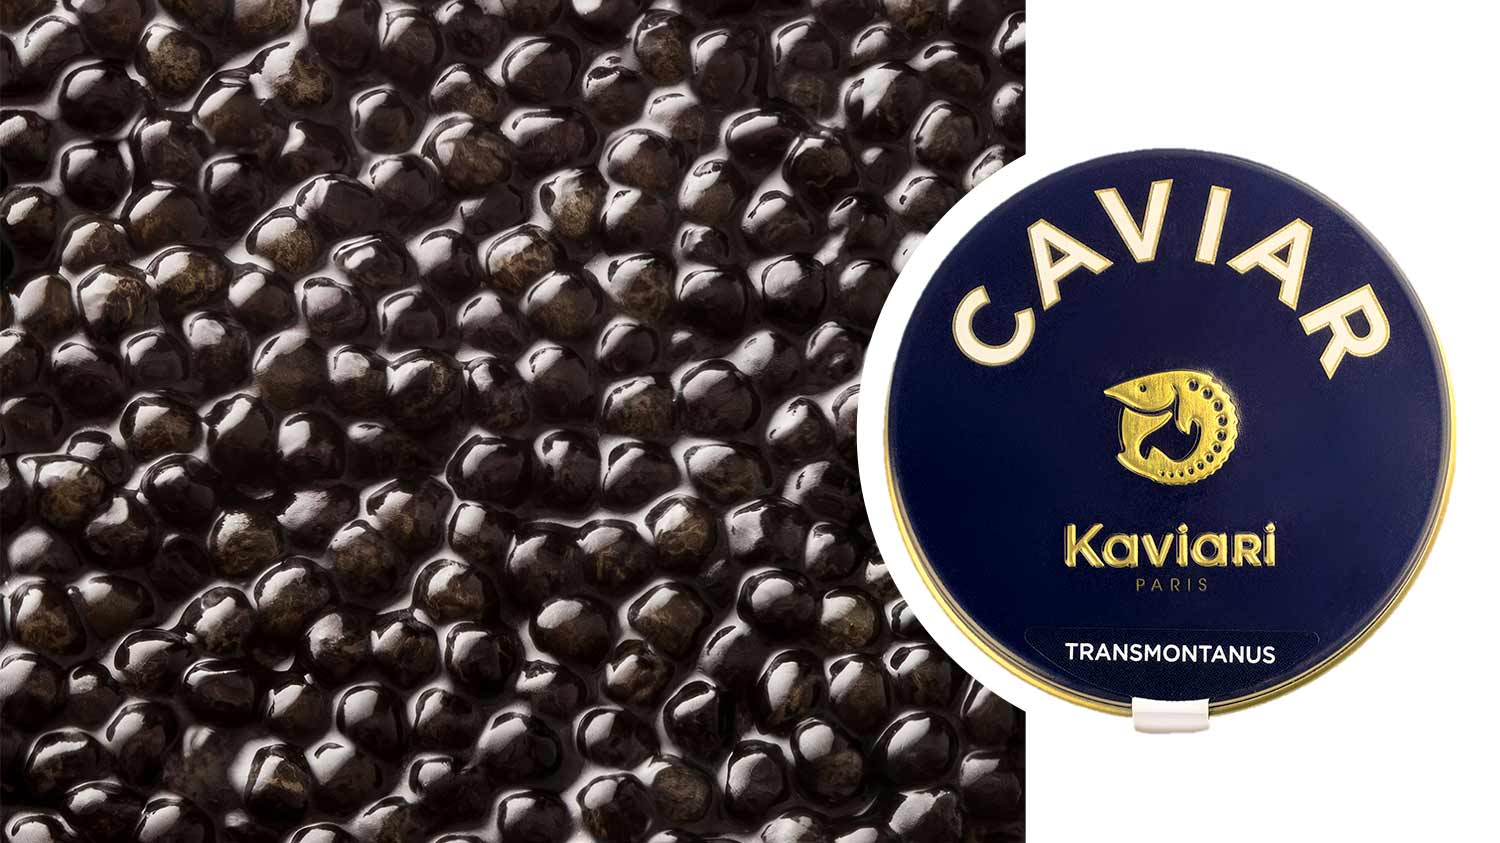 Kaviari_Transmontanus_French_Caviar_Dubai_WISK_UAE.jpg